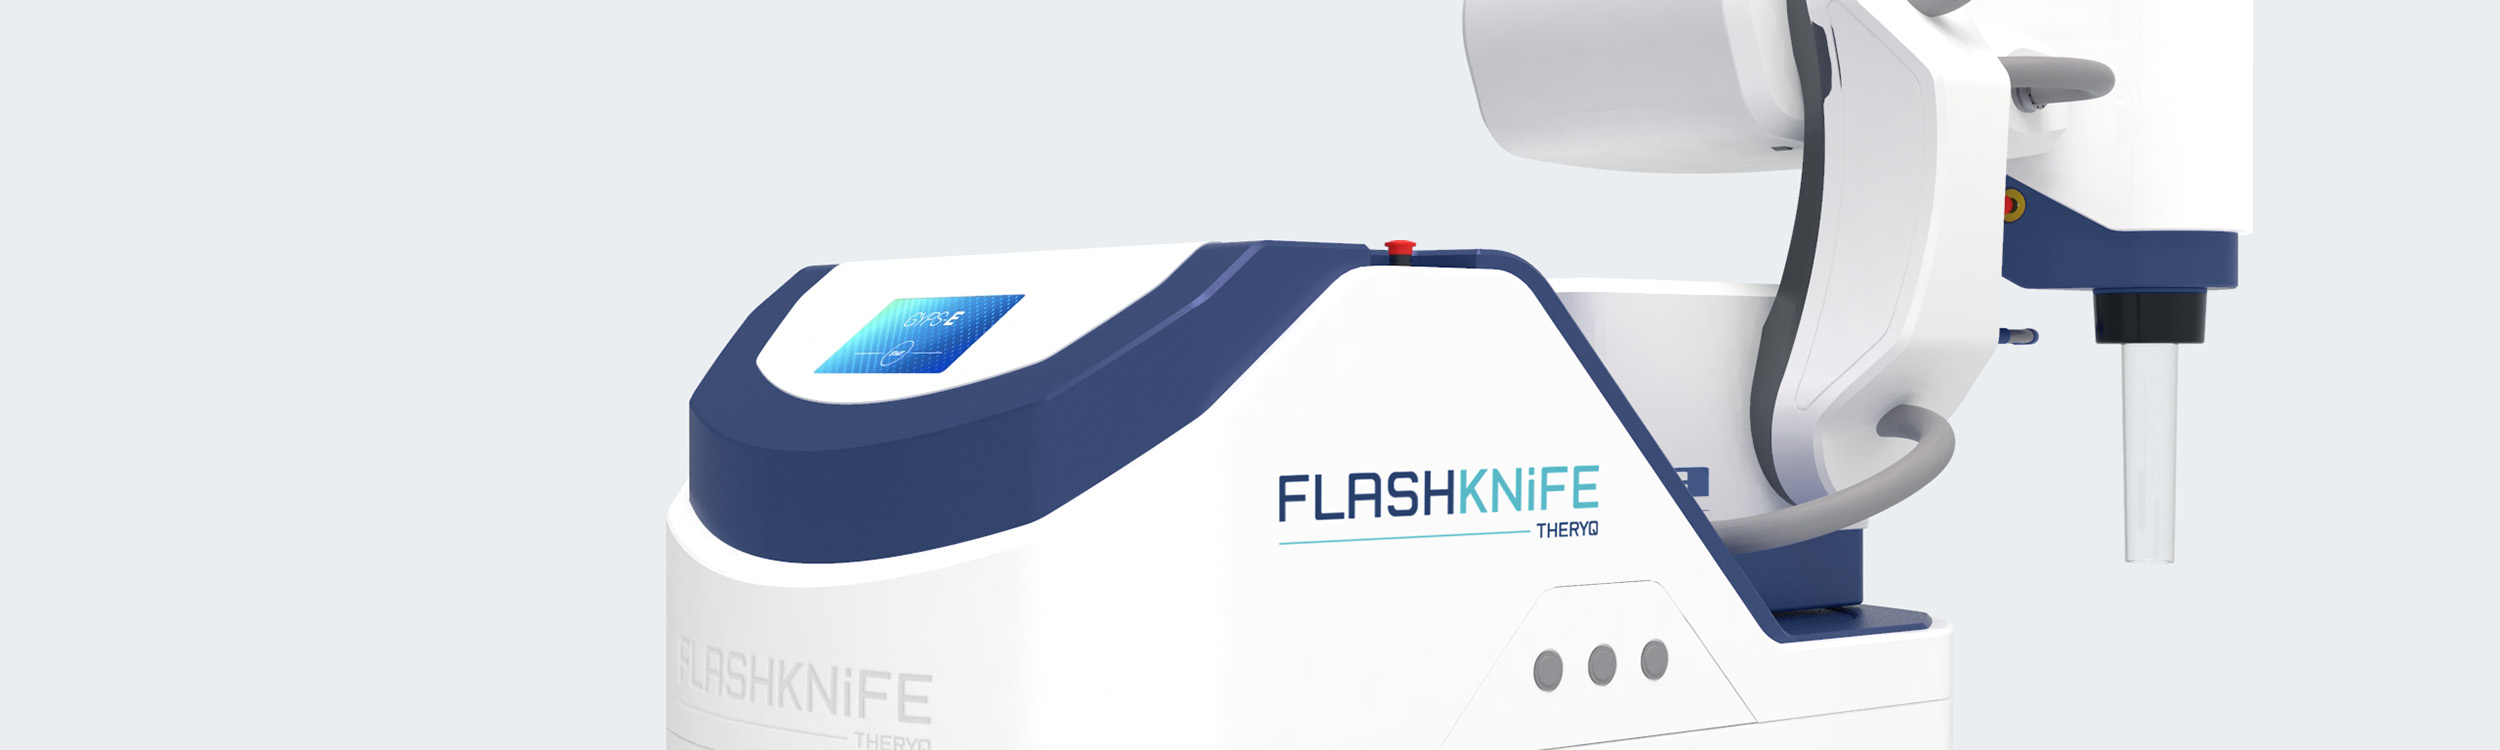 flashknife flash radiotherapy system